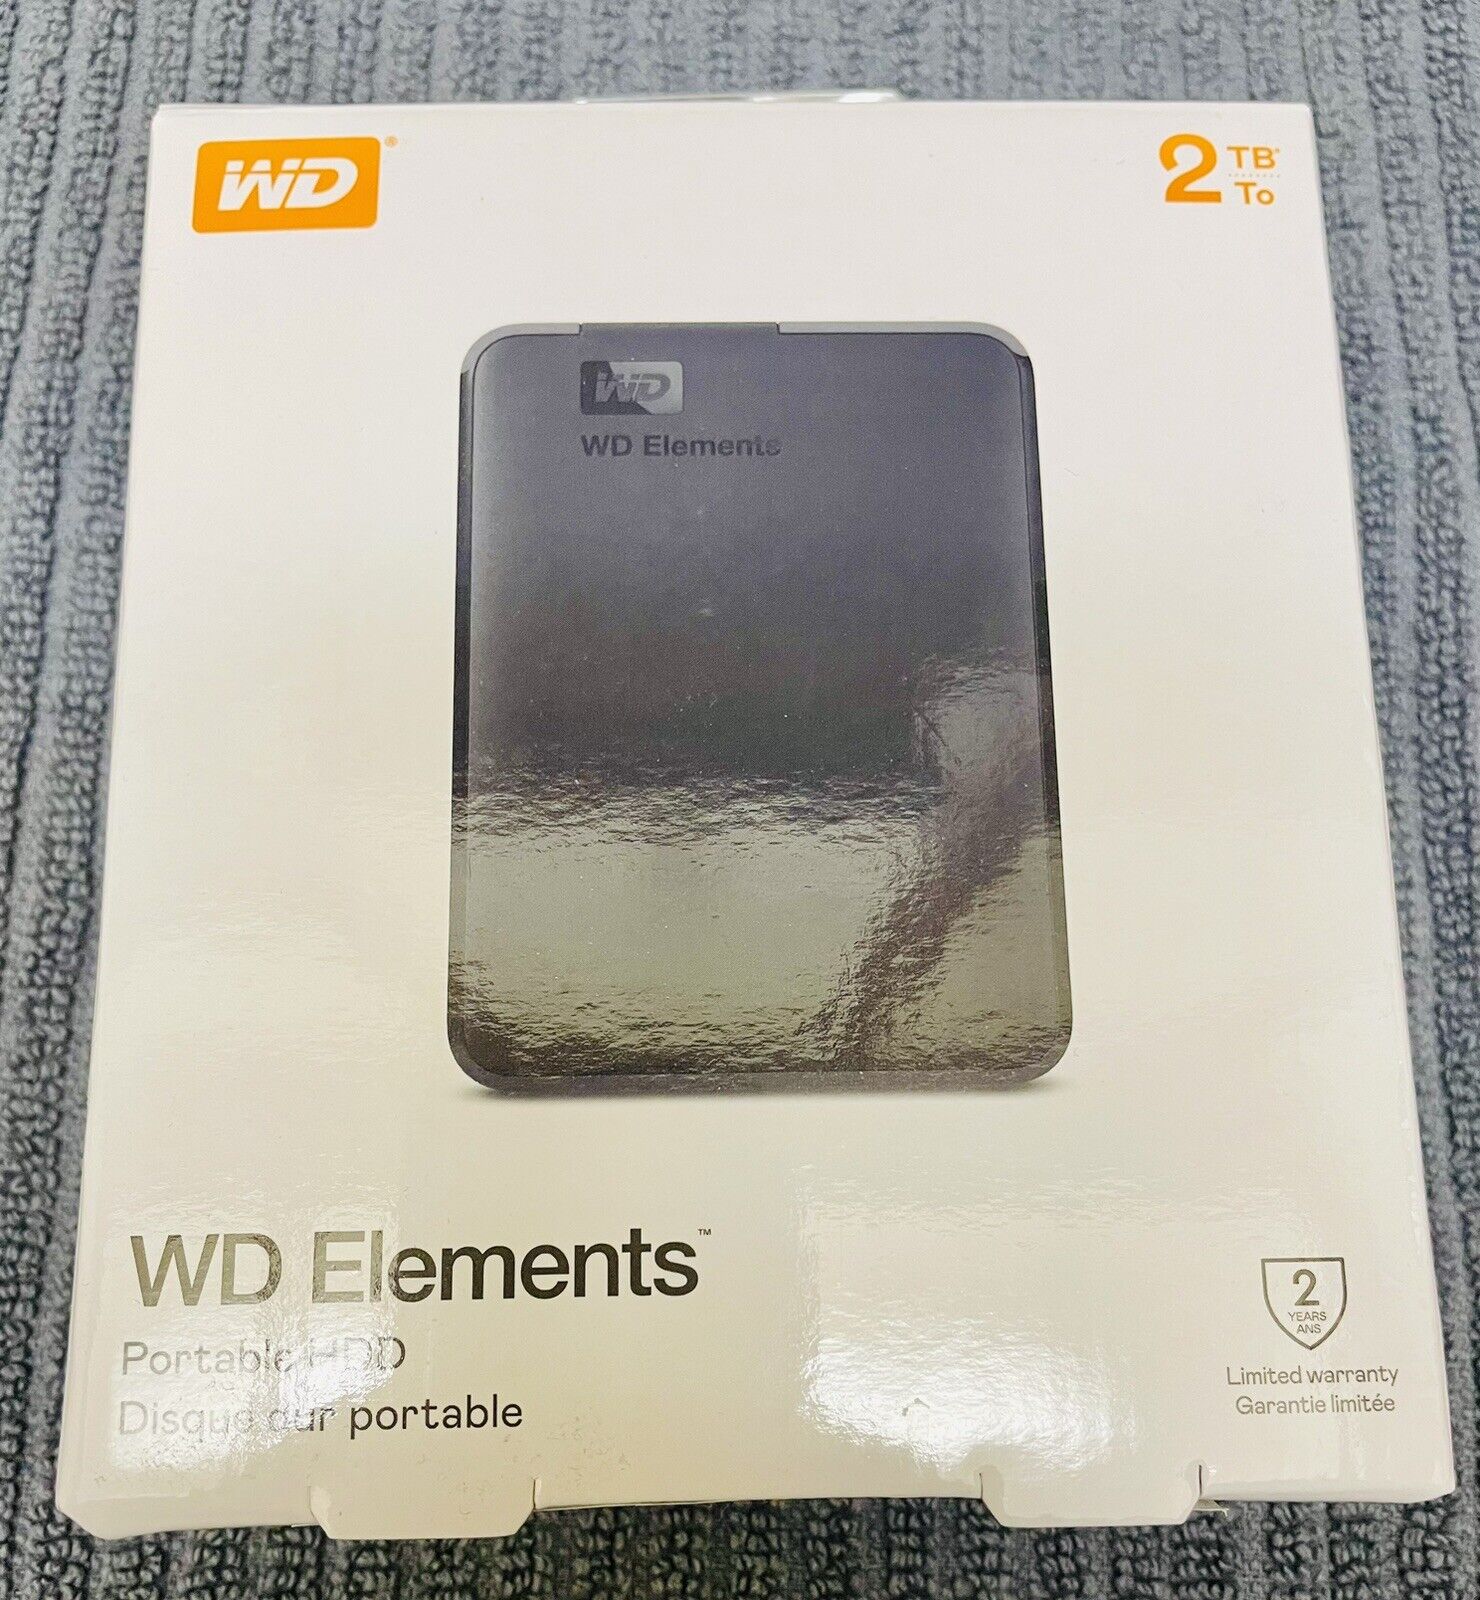 Western Digital WD Elements 2TB USB 3.0 Portable External Hard Drive - Black...